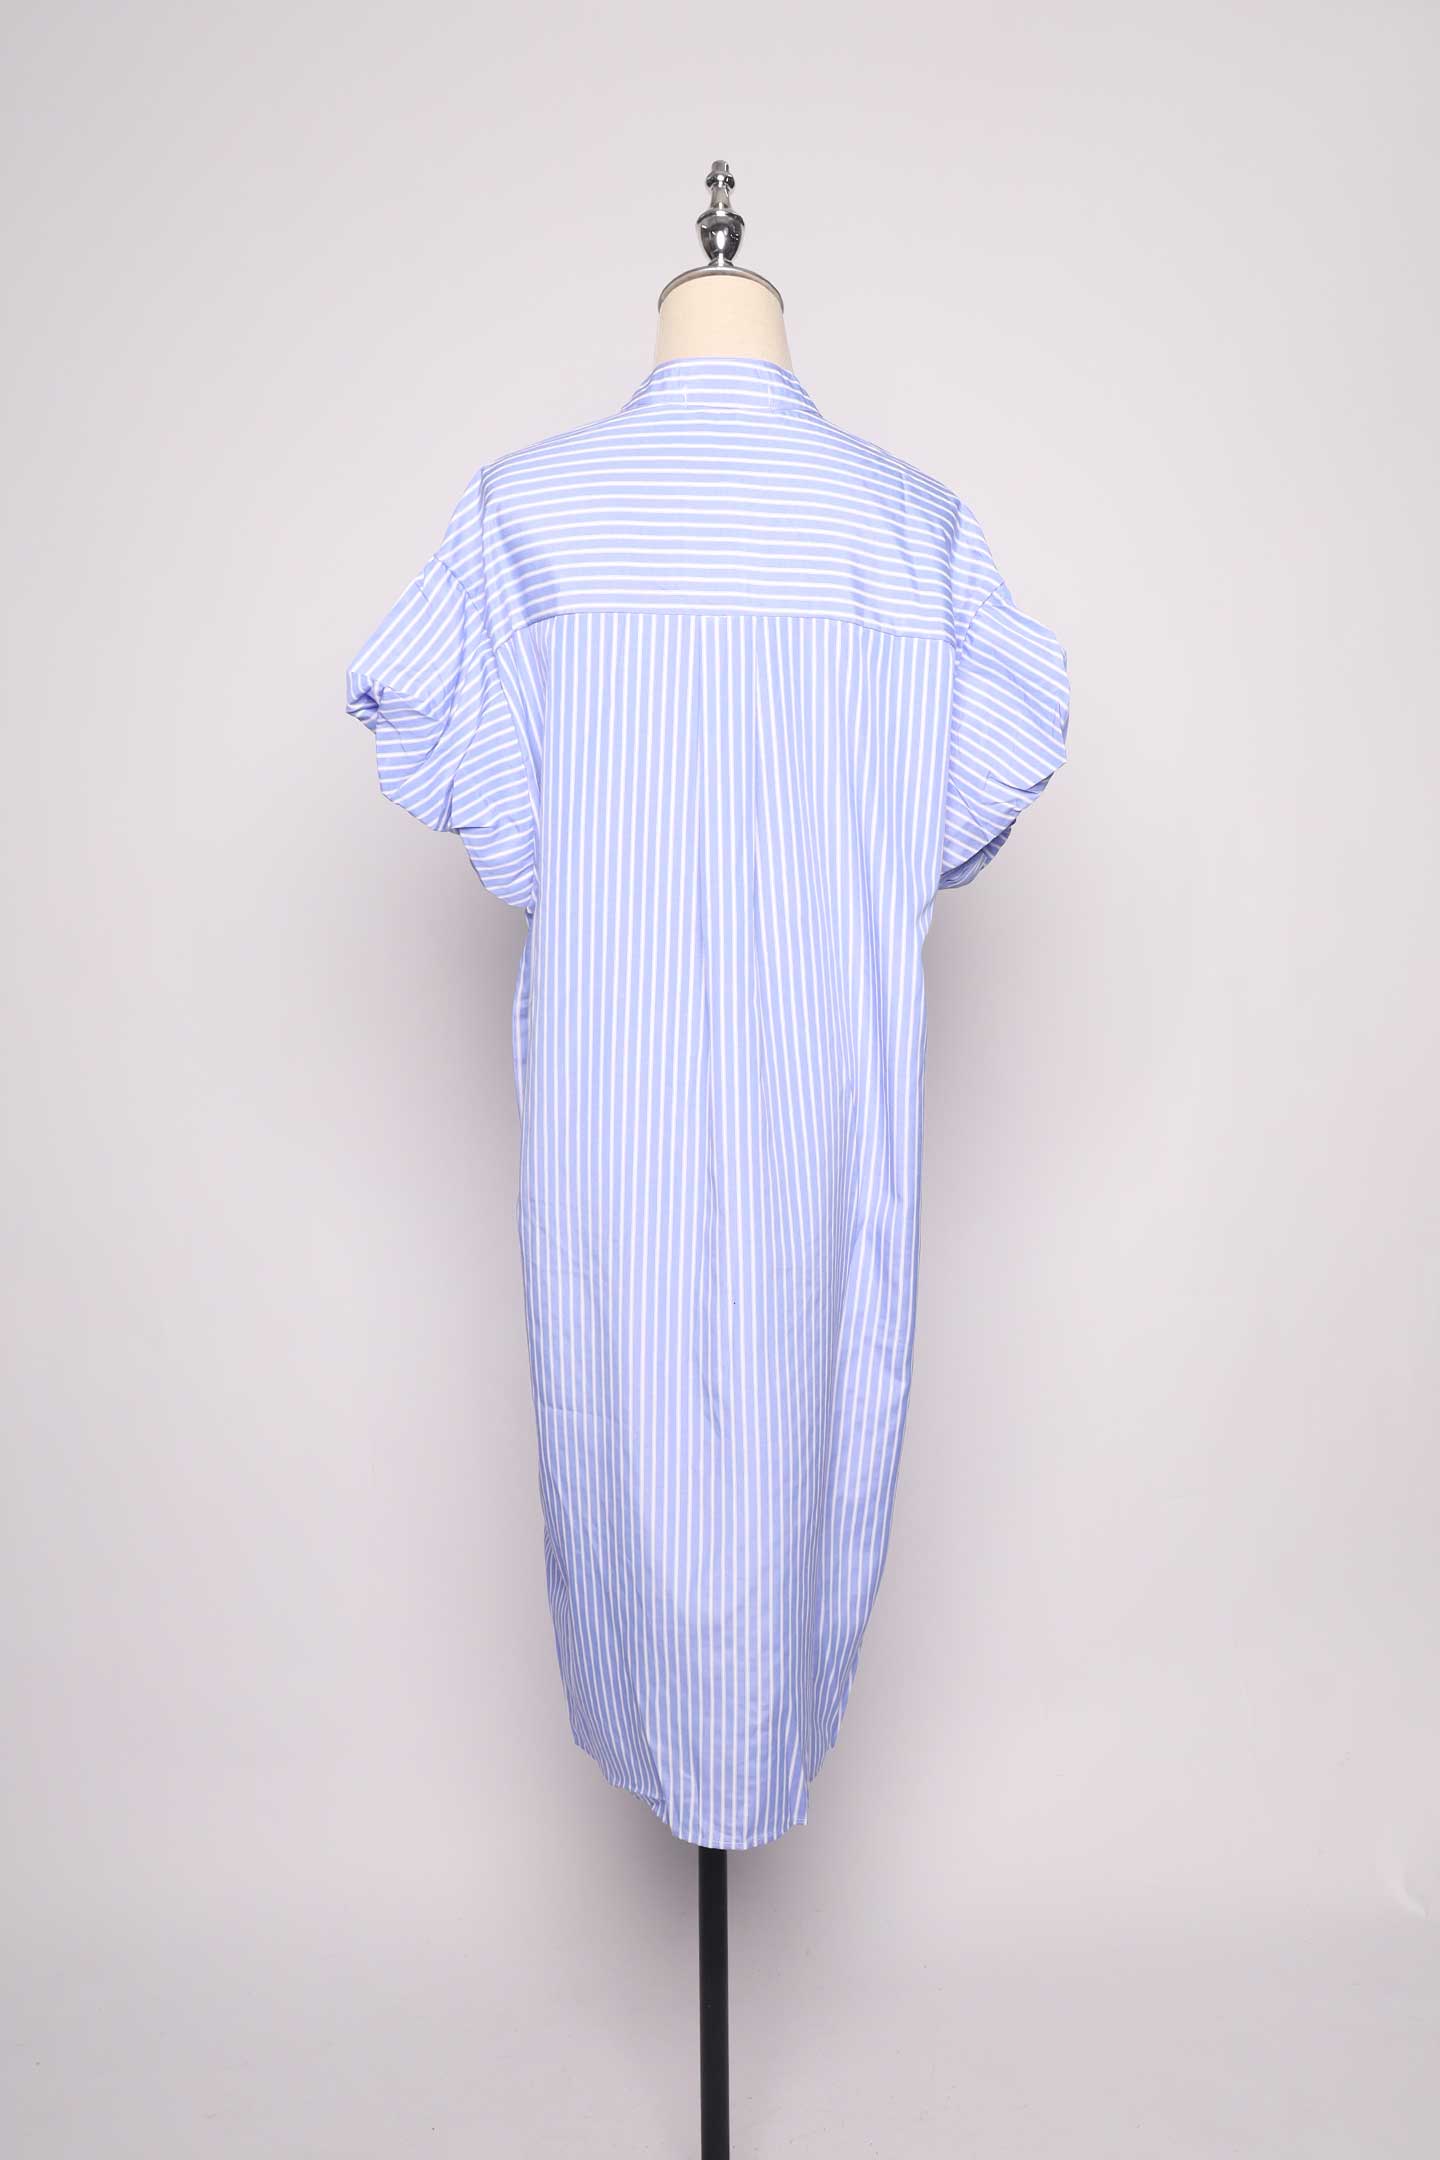 PO - Karter Dress in Blue Stripes